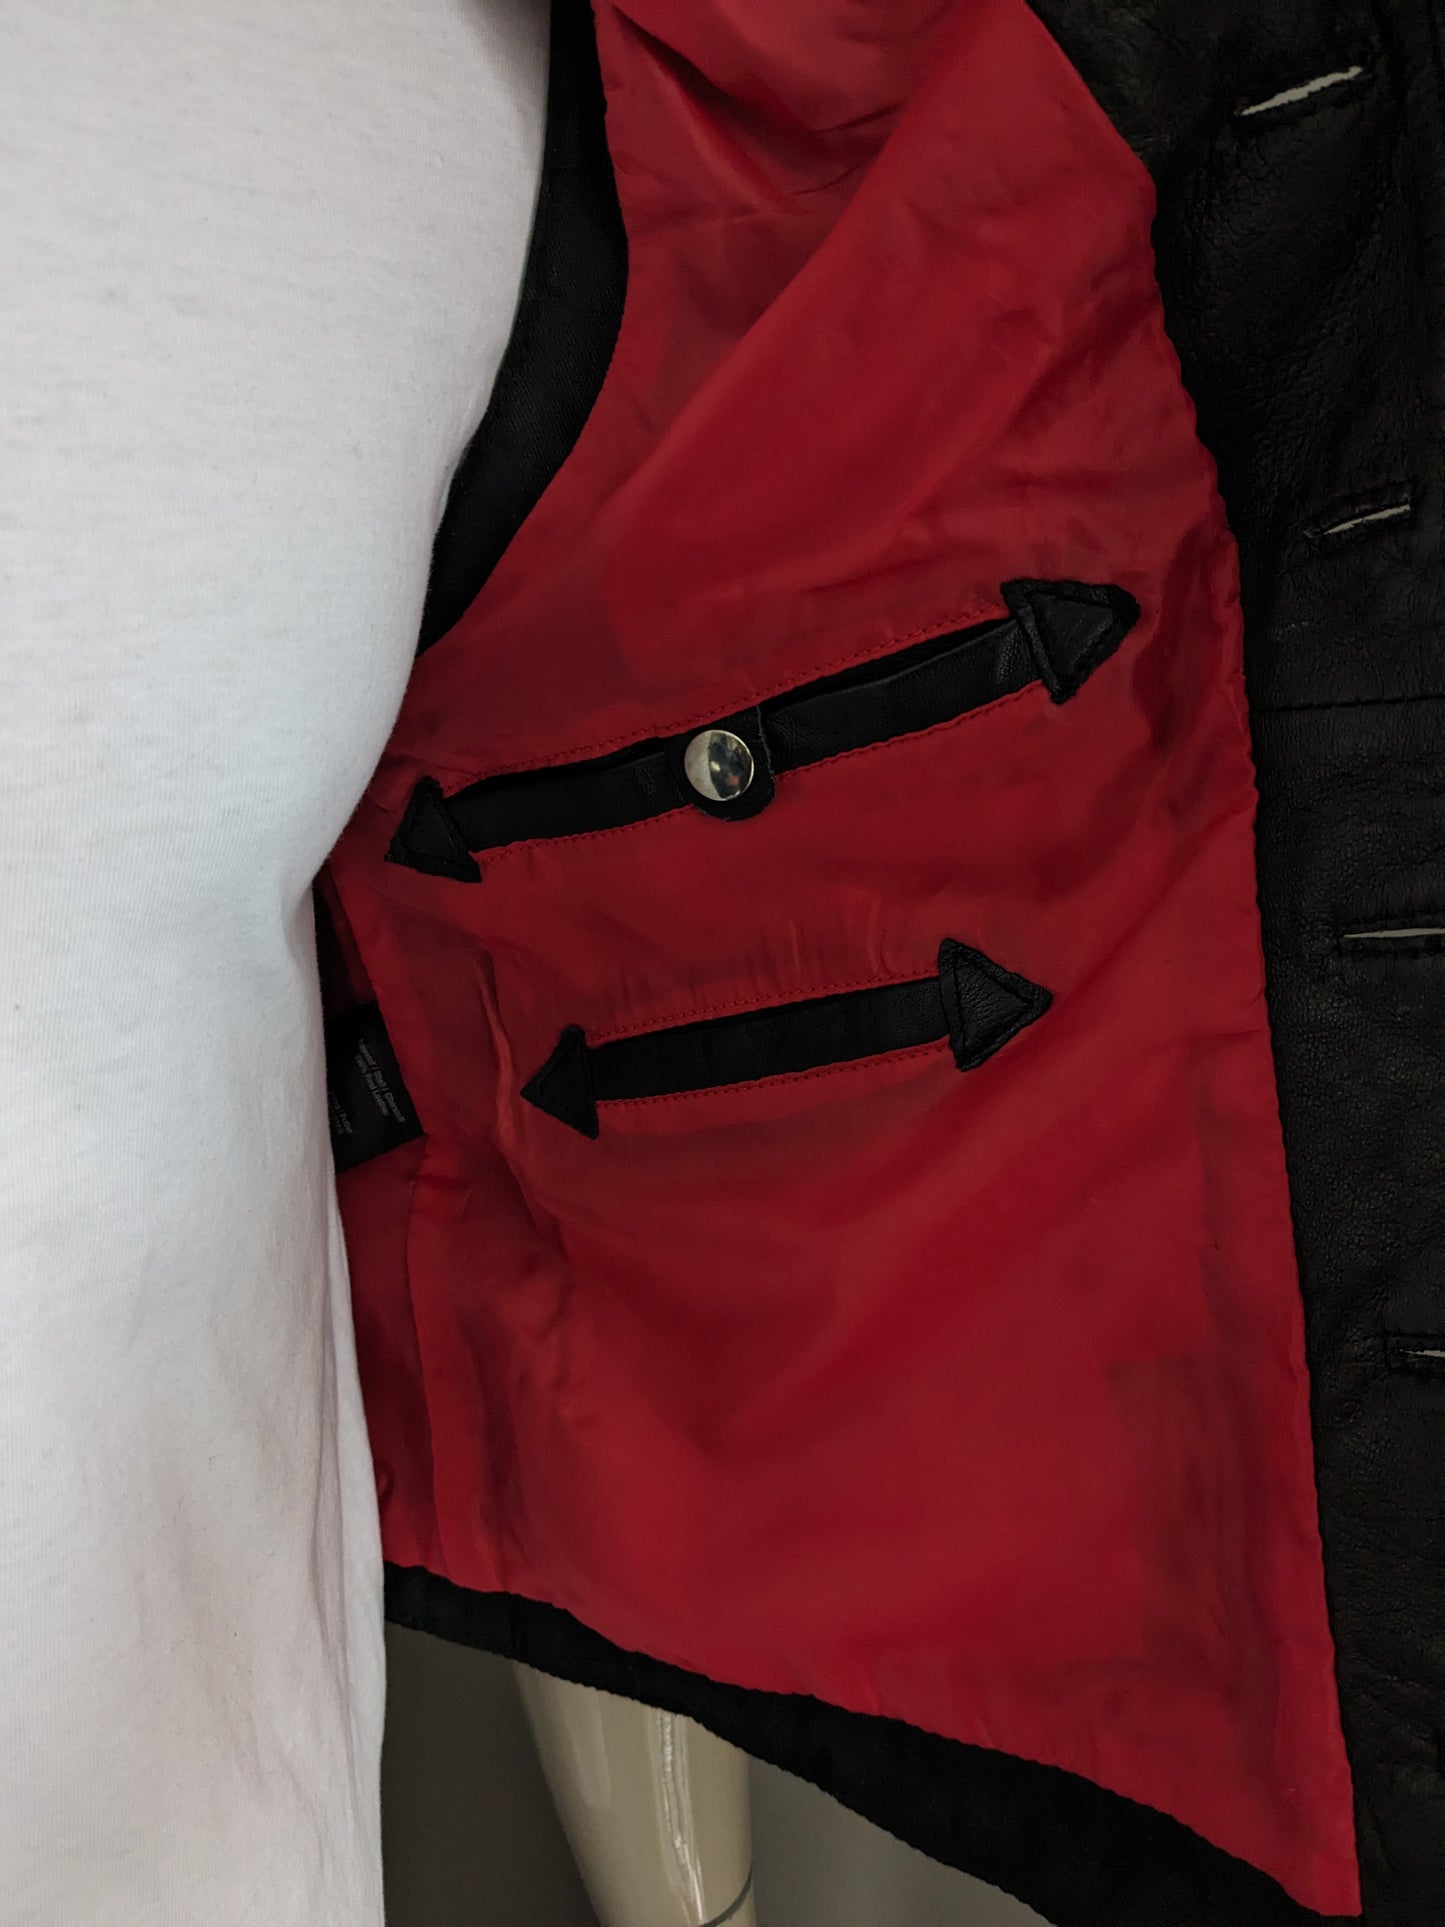 Chaleco de cuero abbagliate de doble lado con 3 bolsillos internos. Negro. Tamaño 50 / m